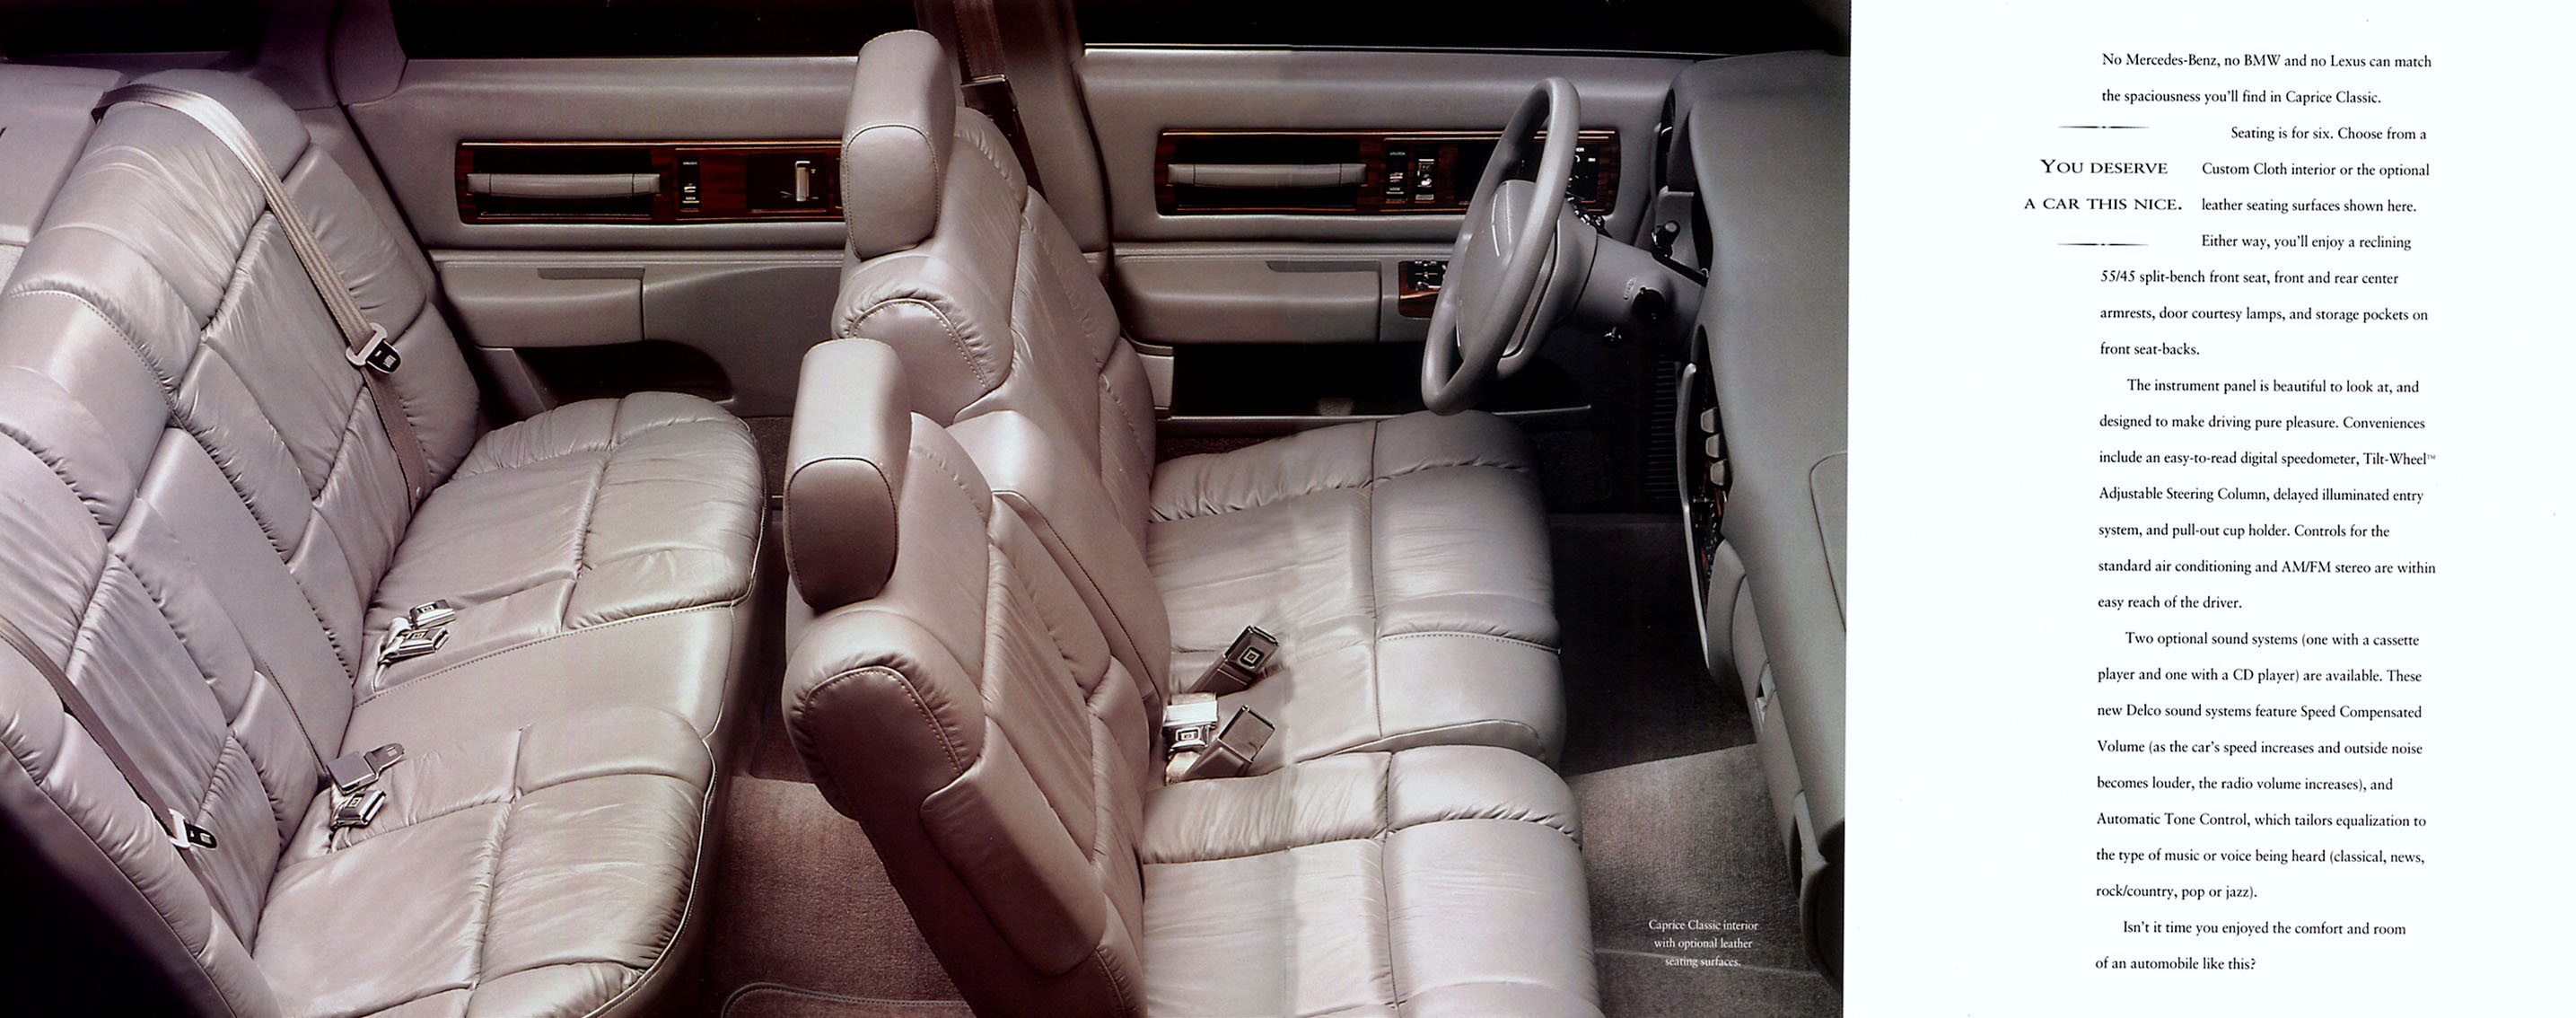 1995_Chevrolet_Caprice_Classic-06-07